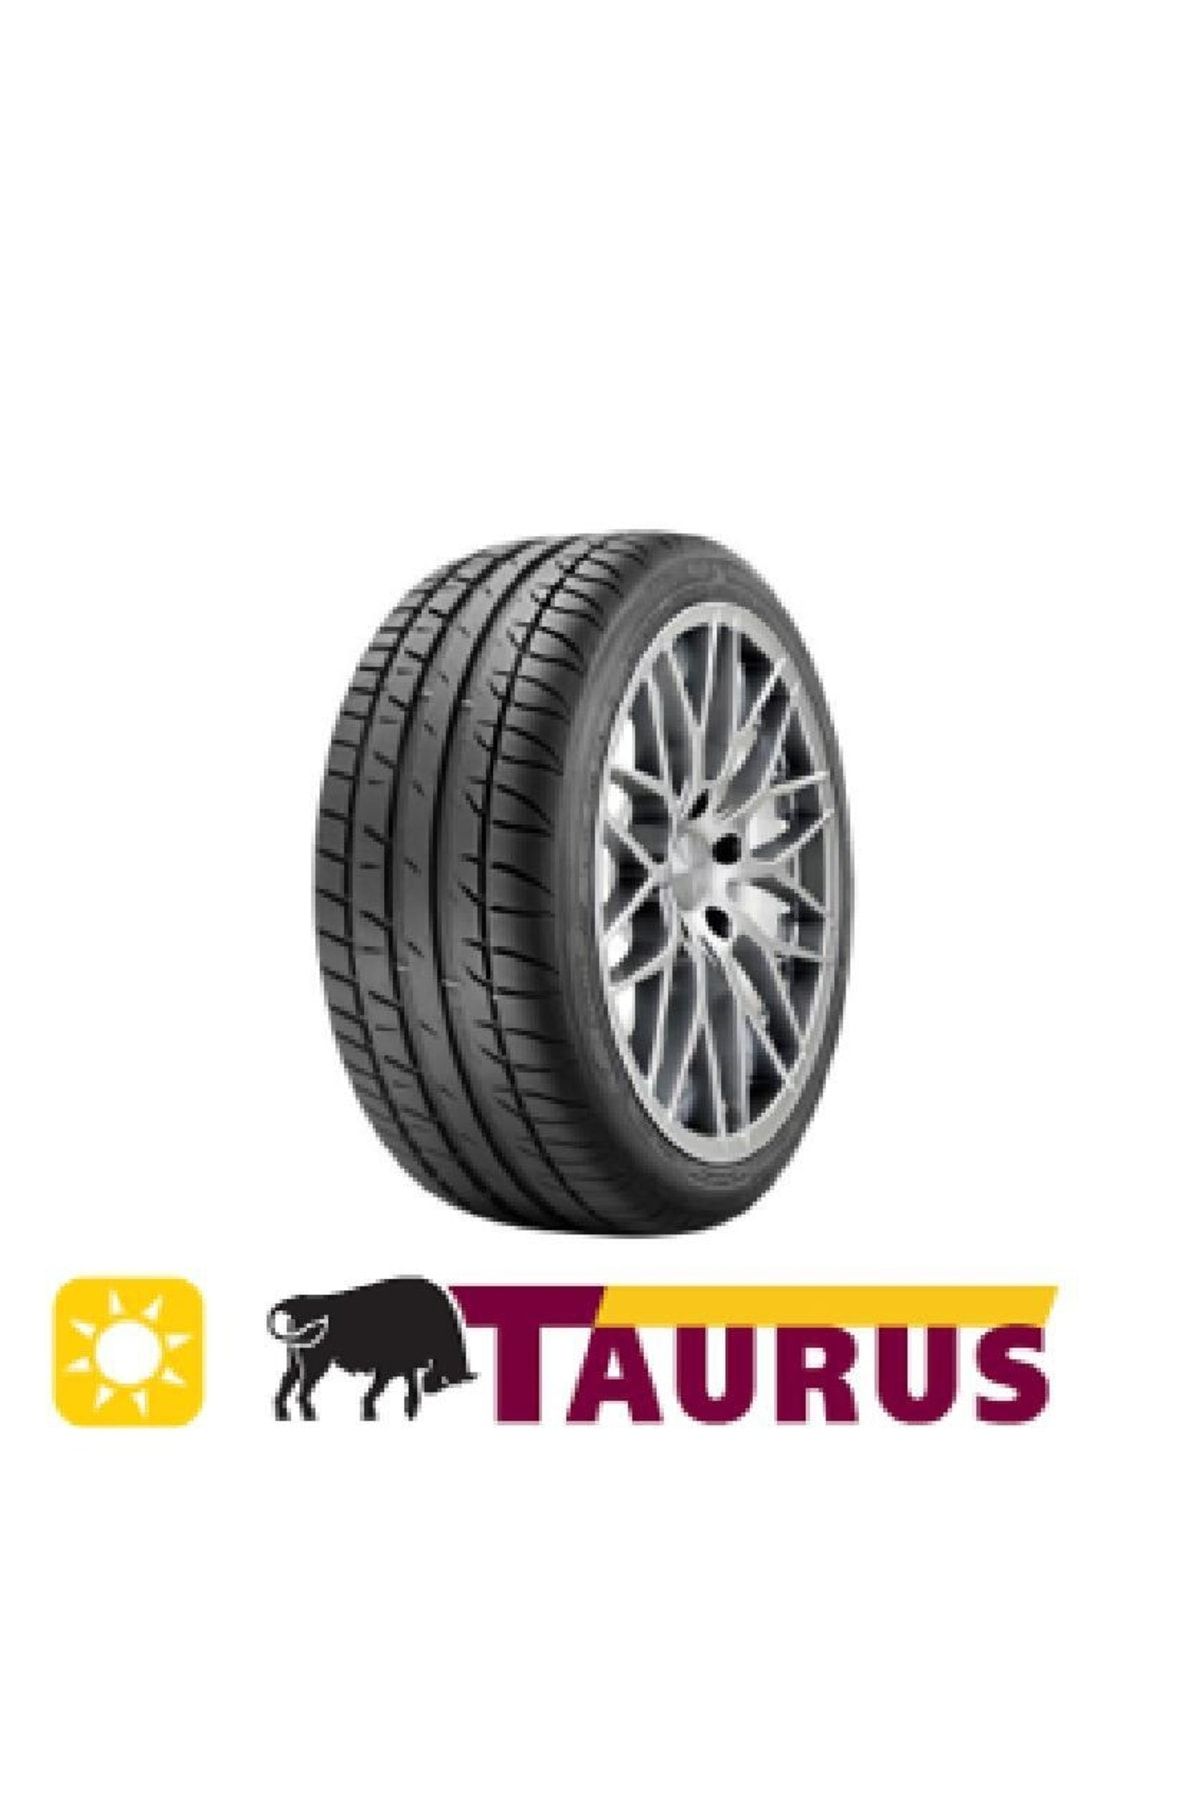 Taurus 195/55 R16 91v Xl